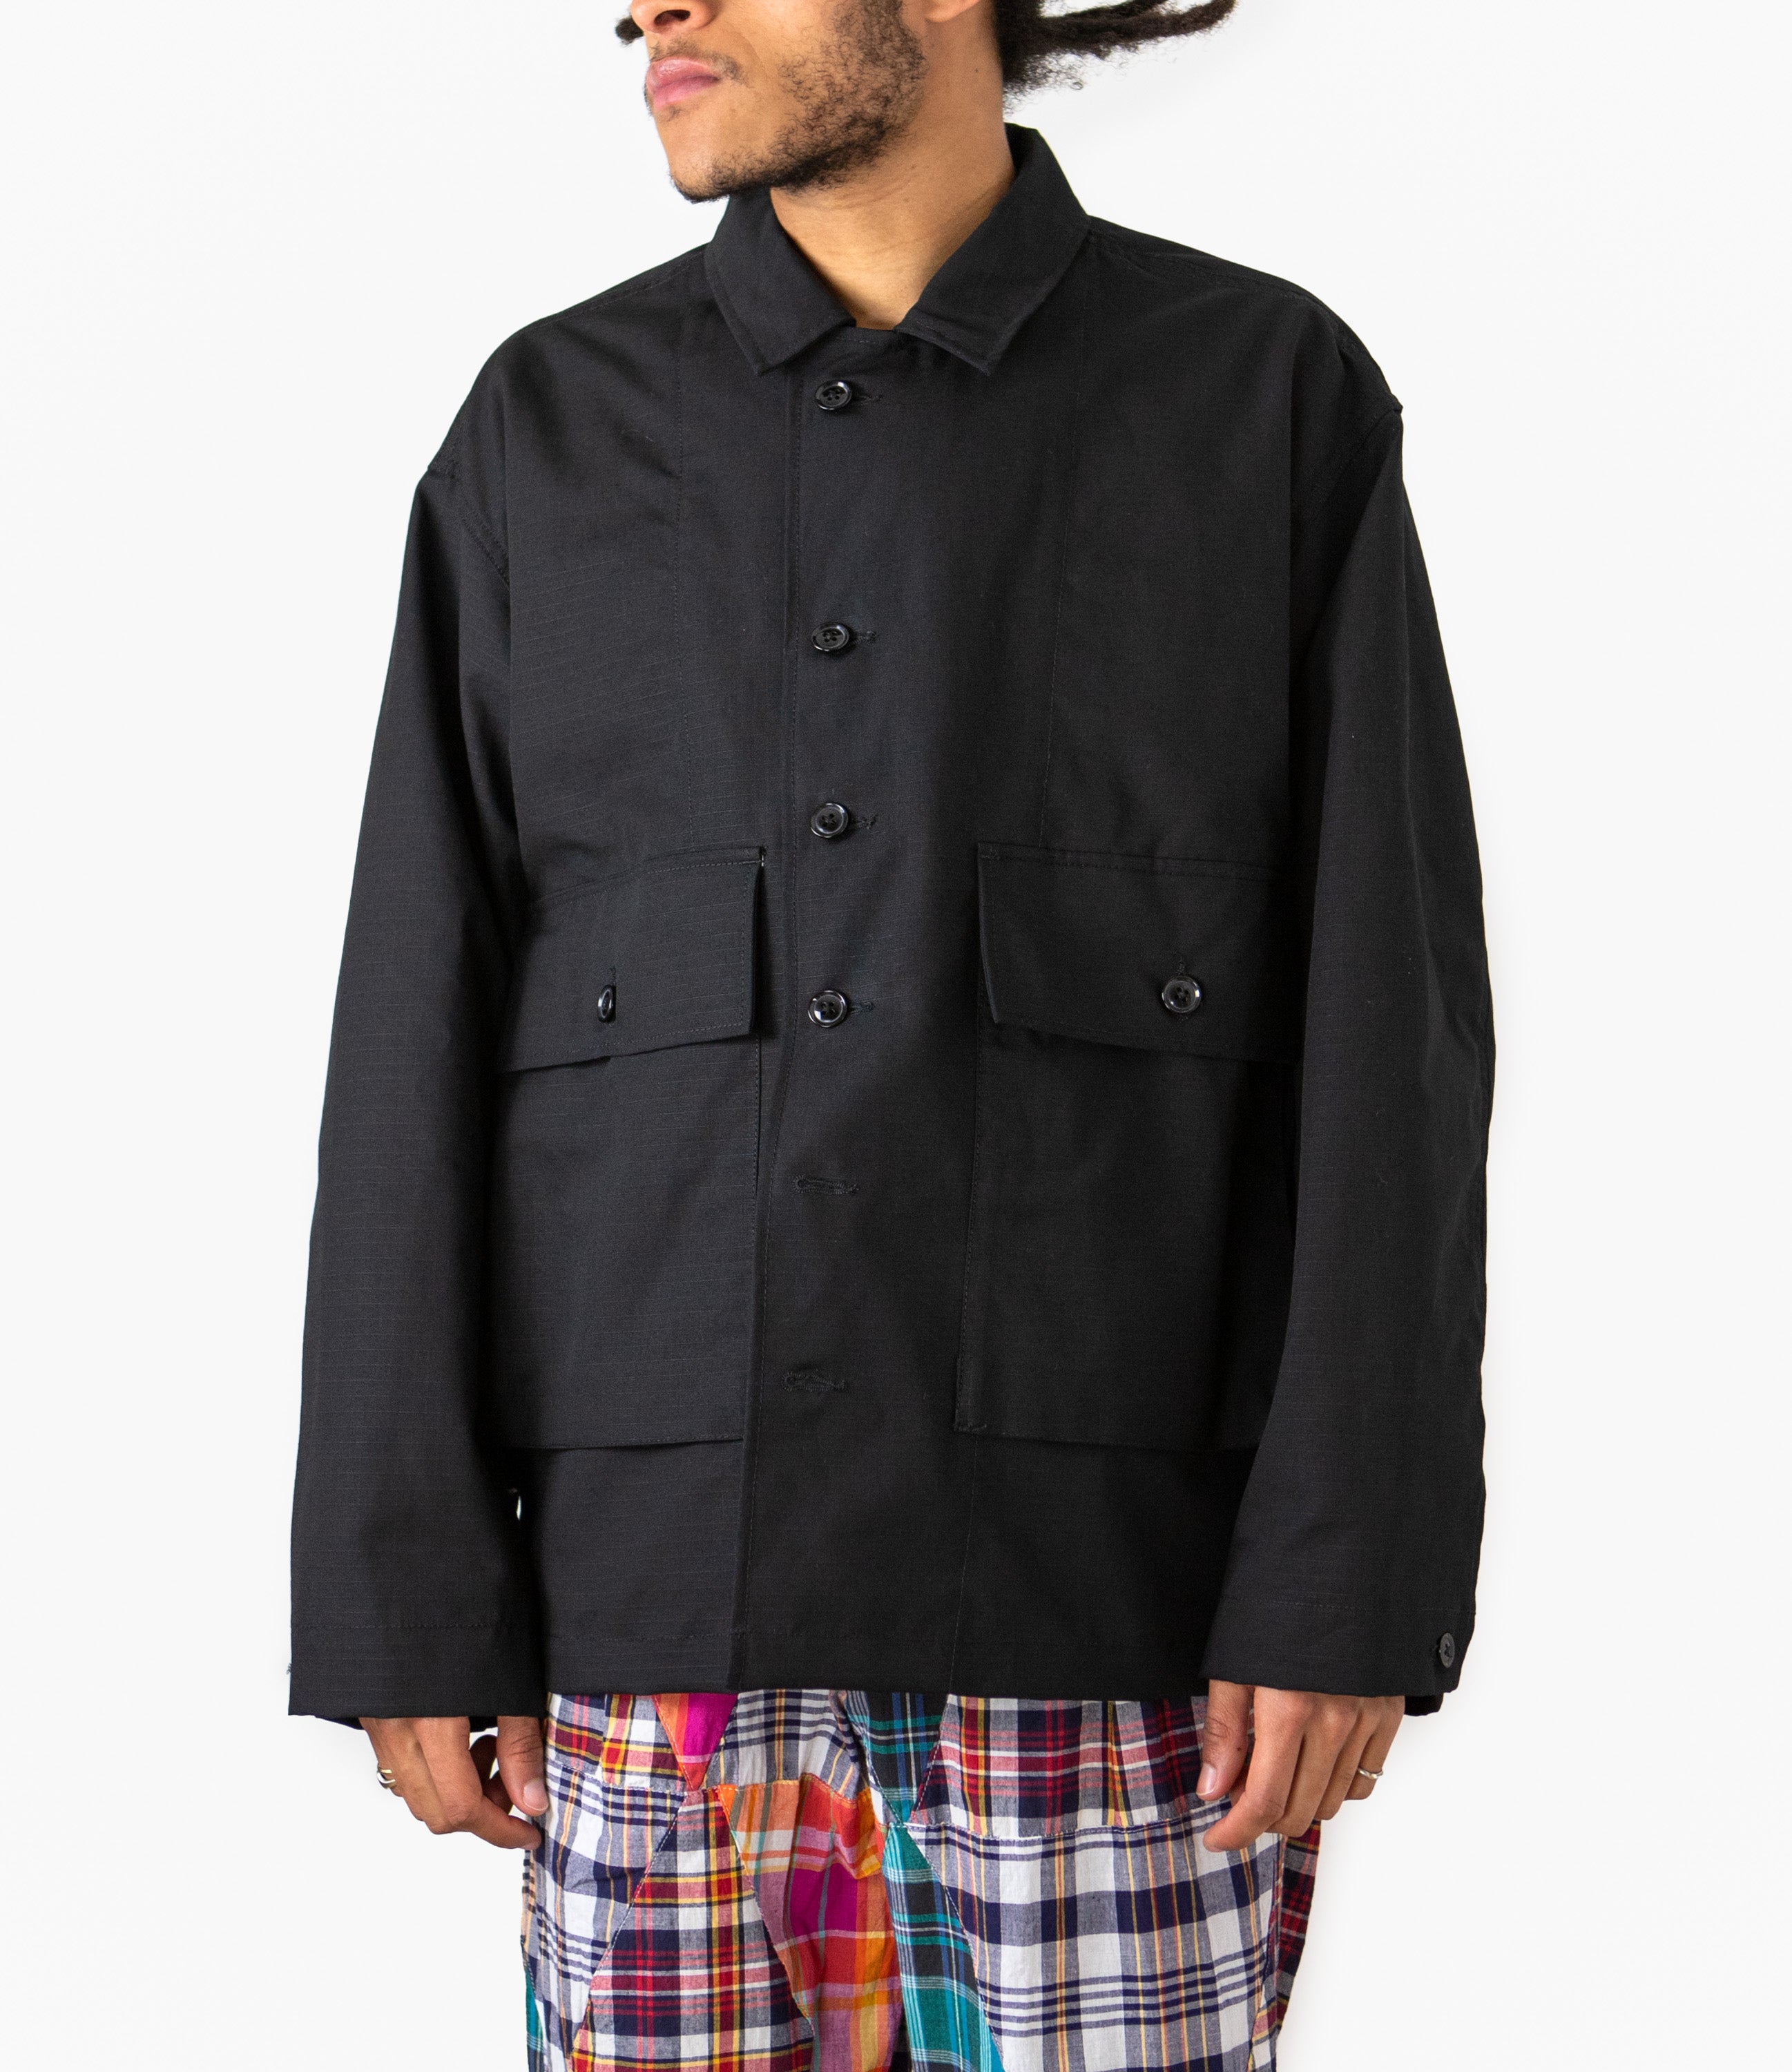 Engineered Garments Workaday Sea Bees Jacket – Black Cotton Ripstop